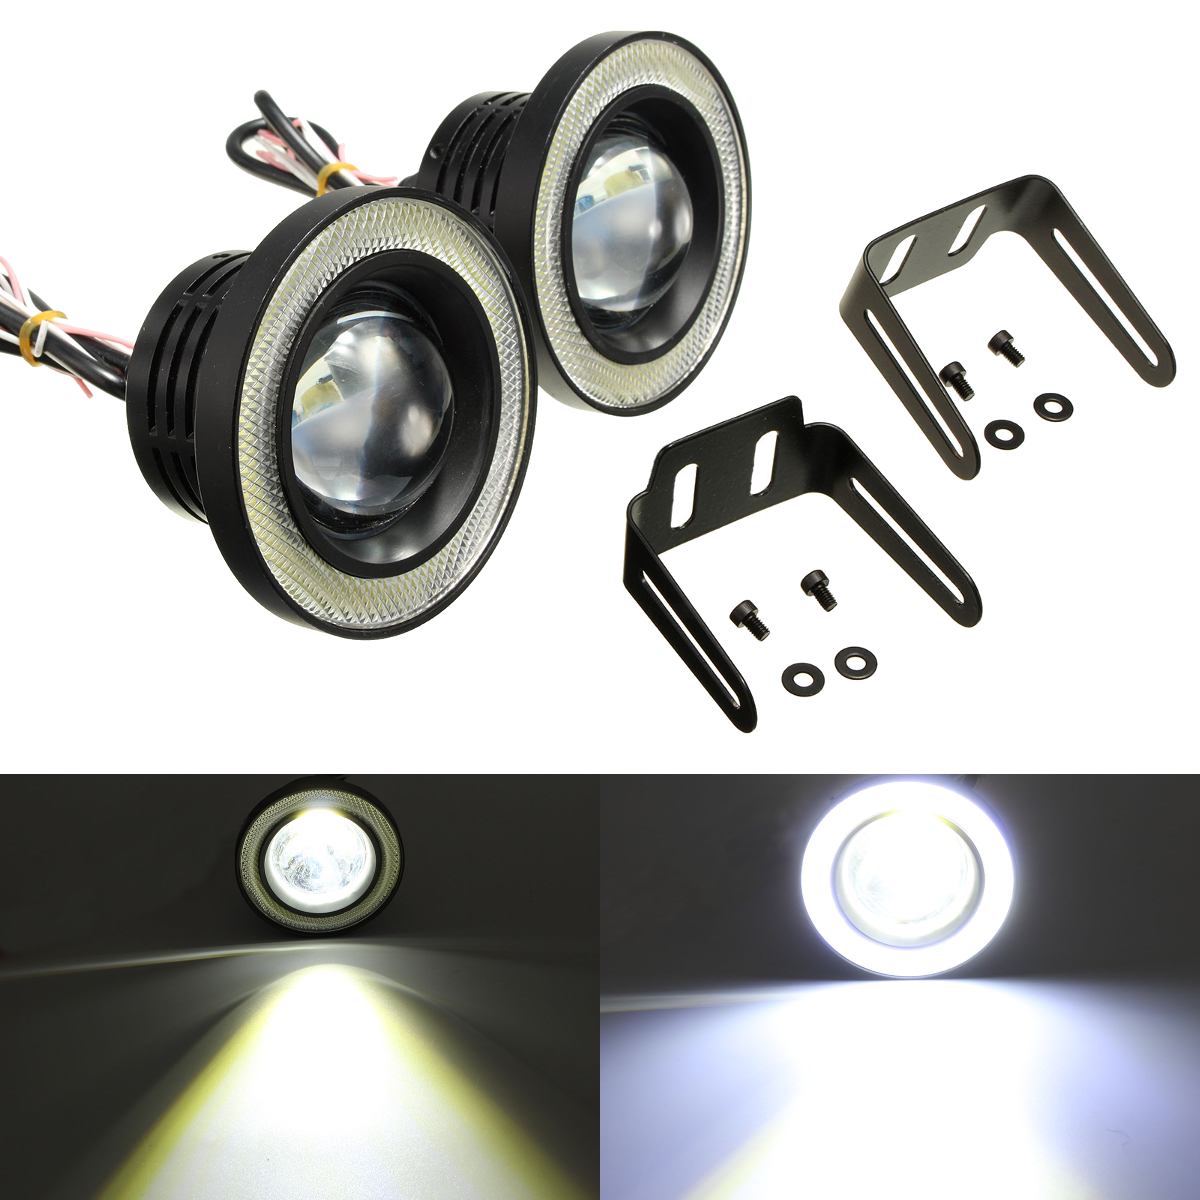 2x High Power 3.5 inch Projector LED Fog Light w/ White Angel Eyes Halo Ring DRL 